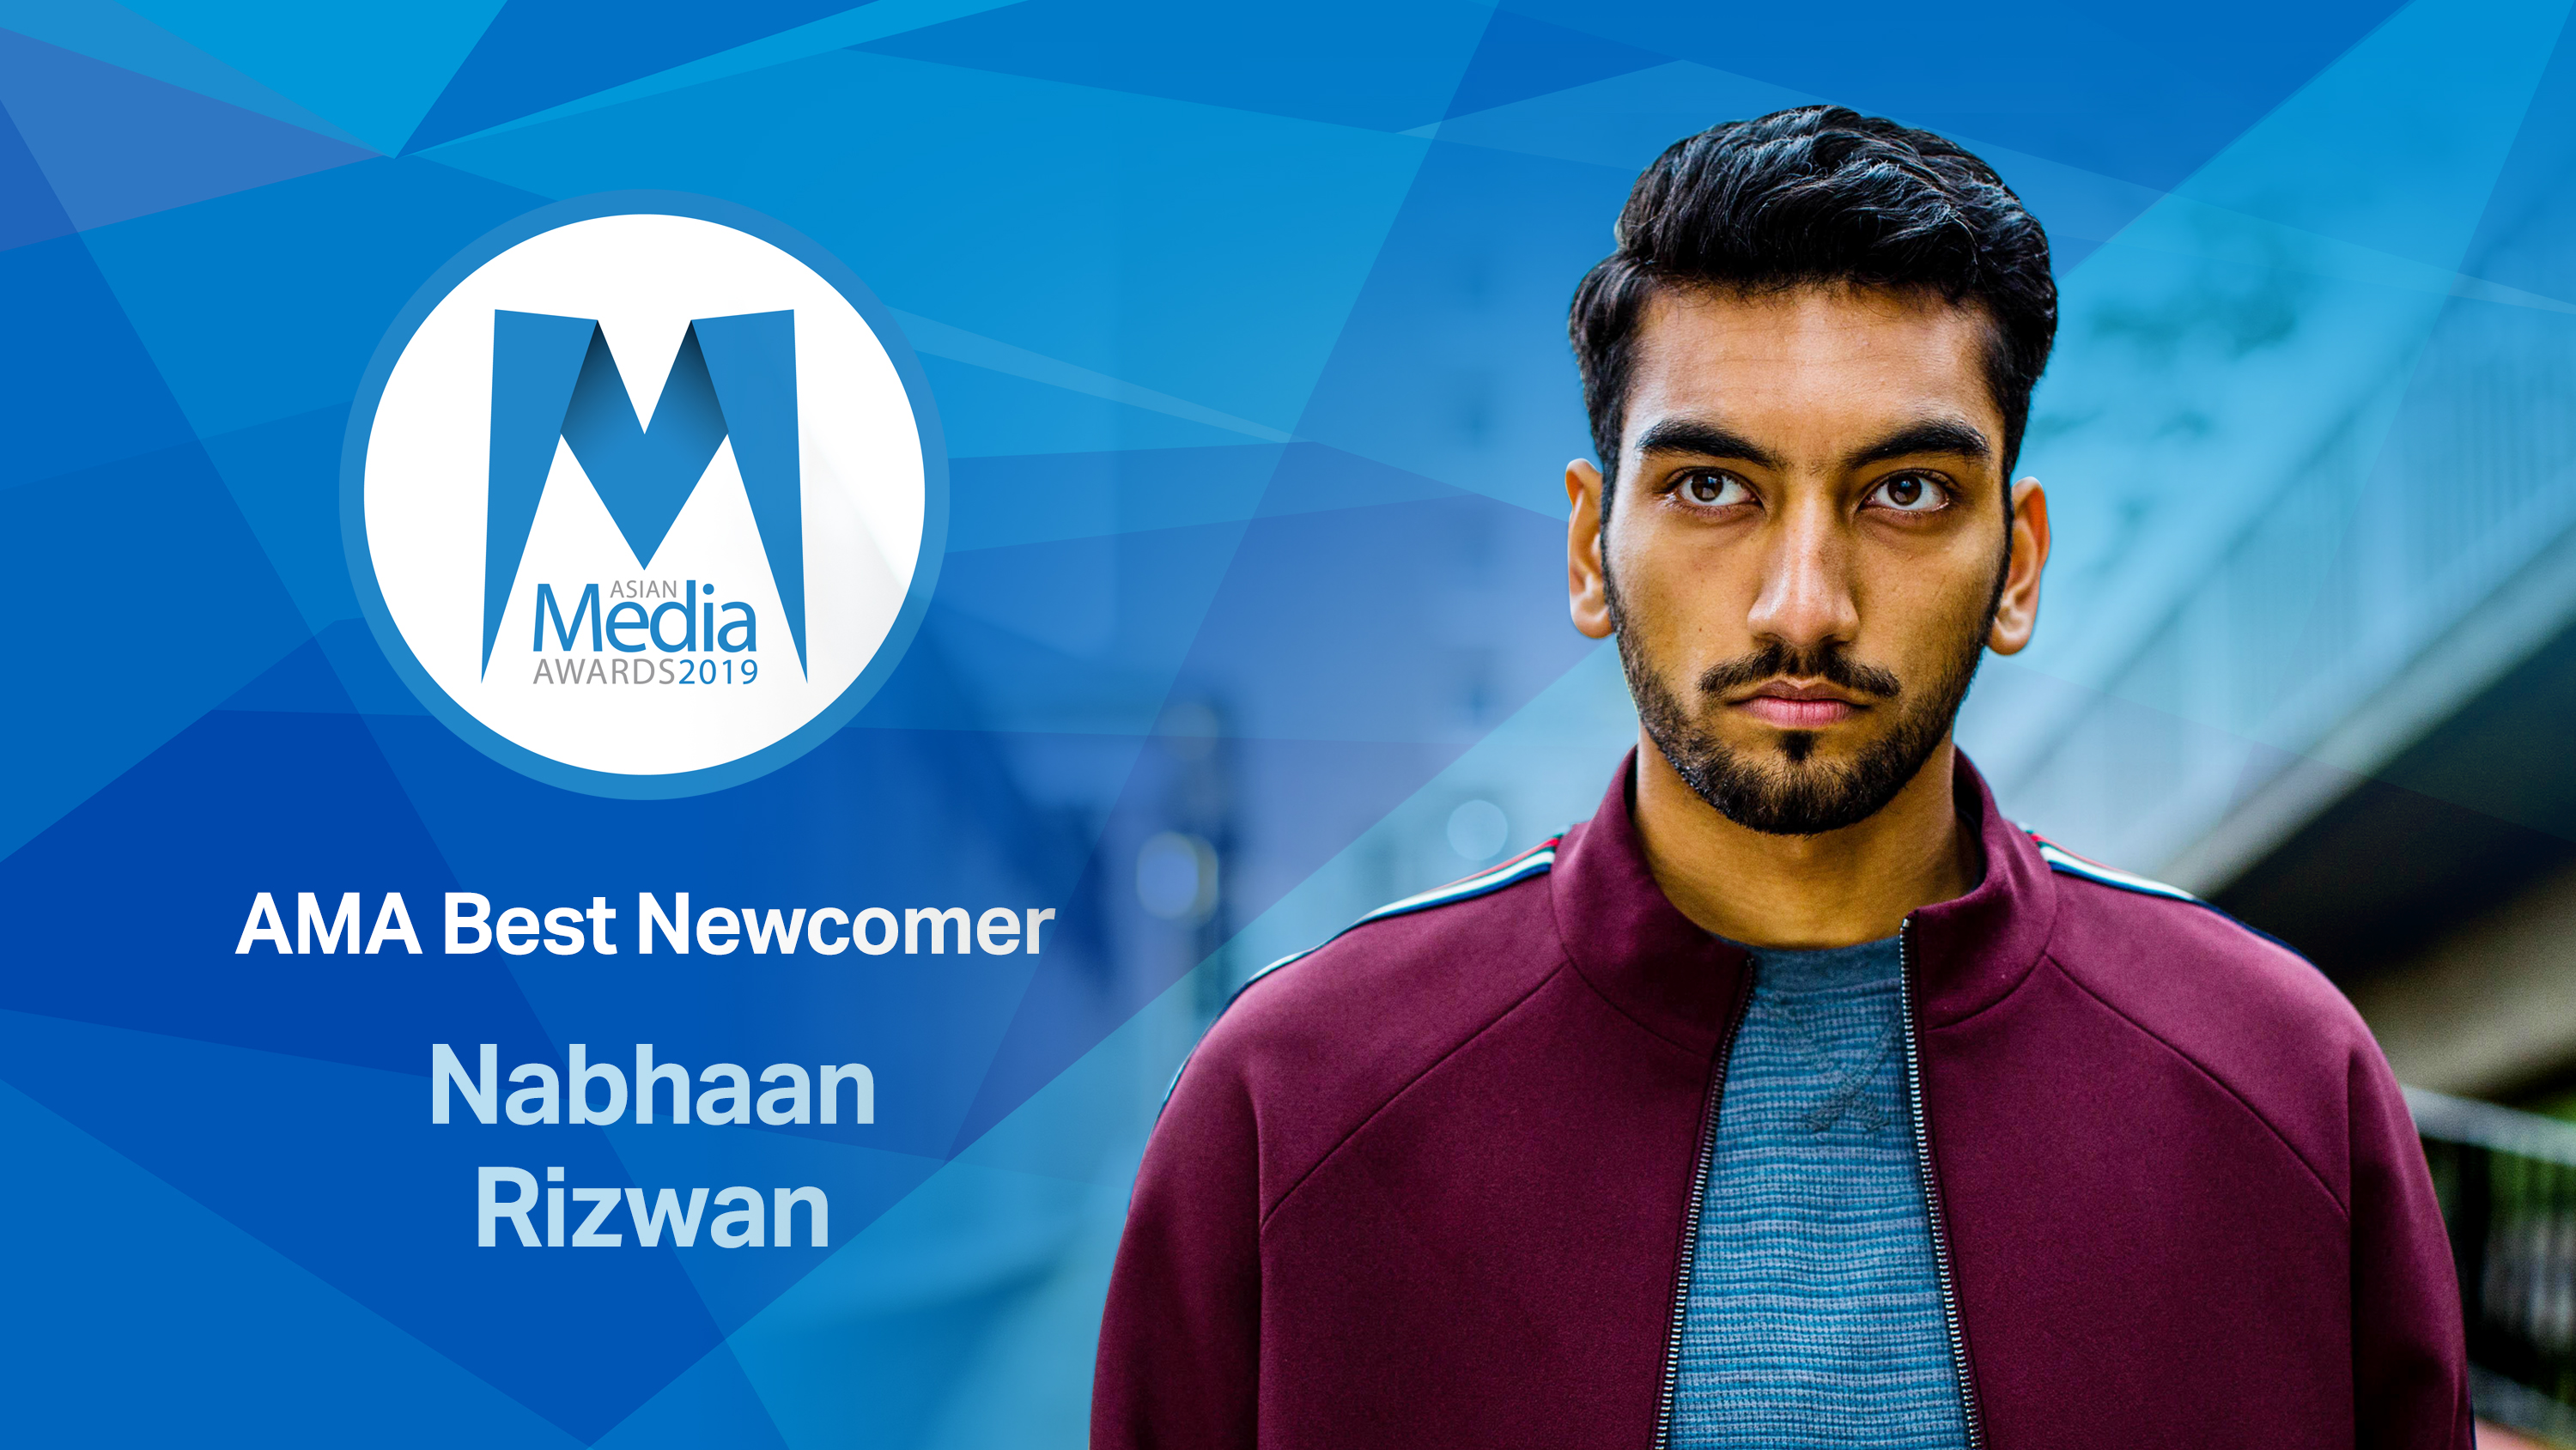 Nabhaan Rizwan is AMA Best Newcomer 2019